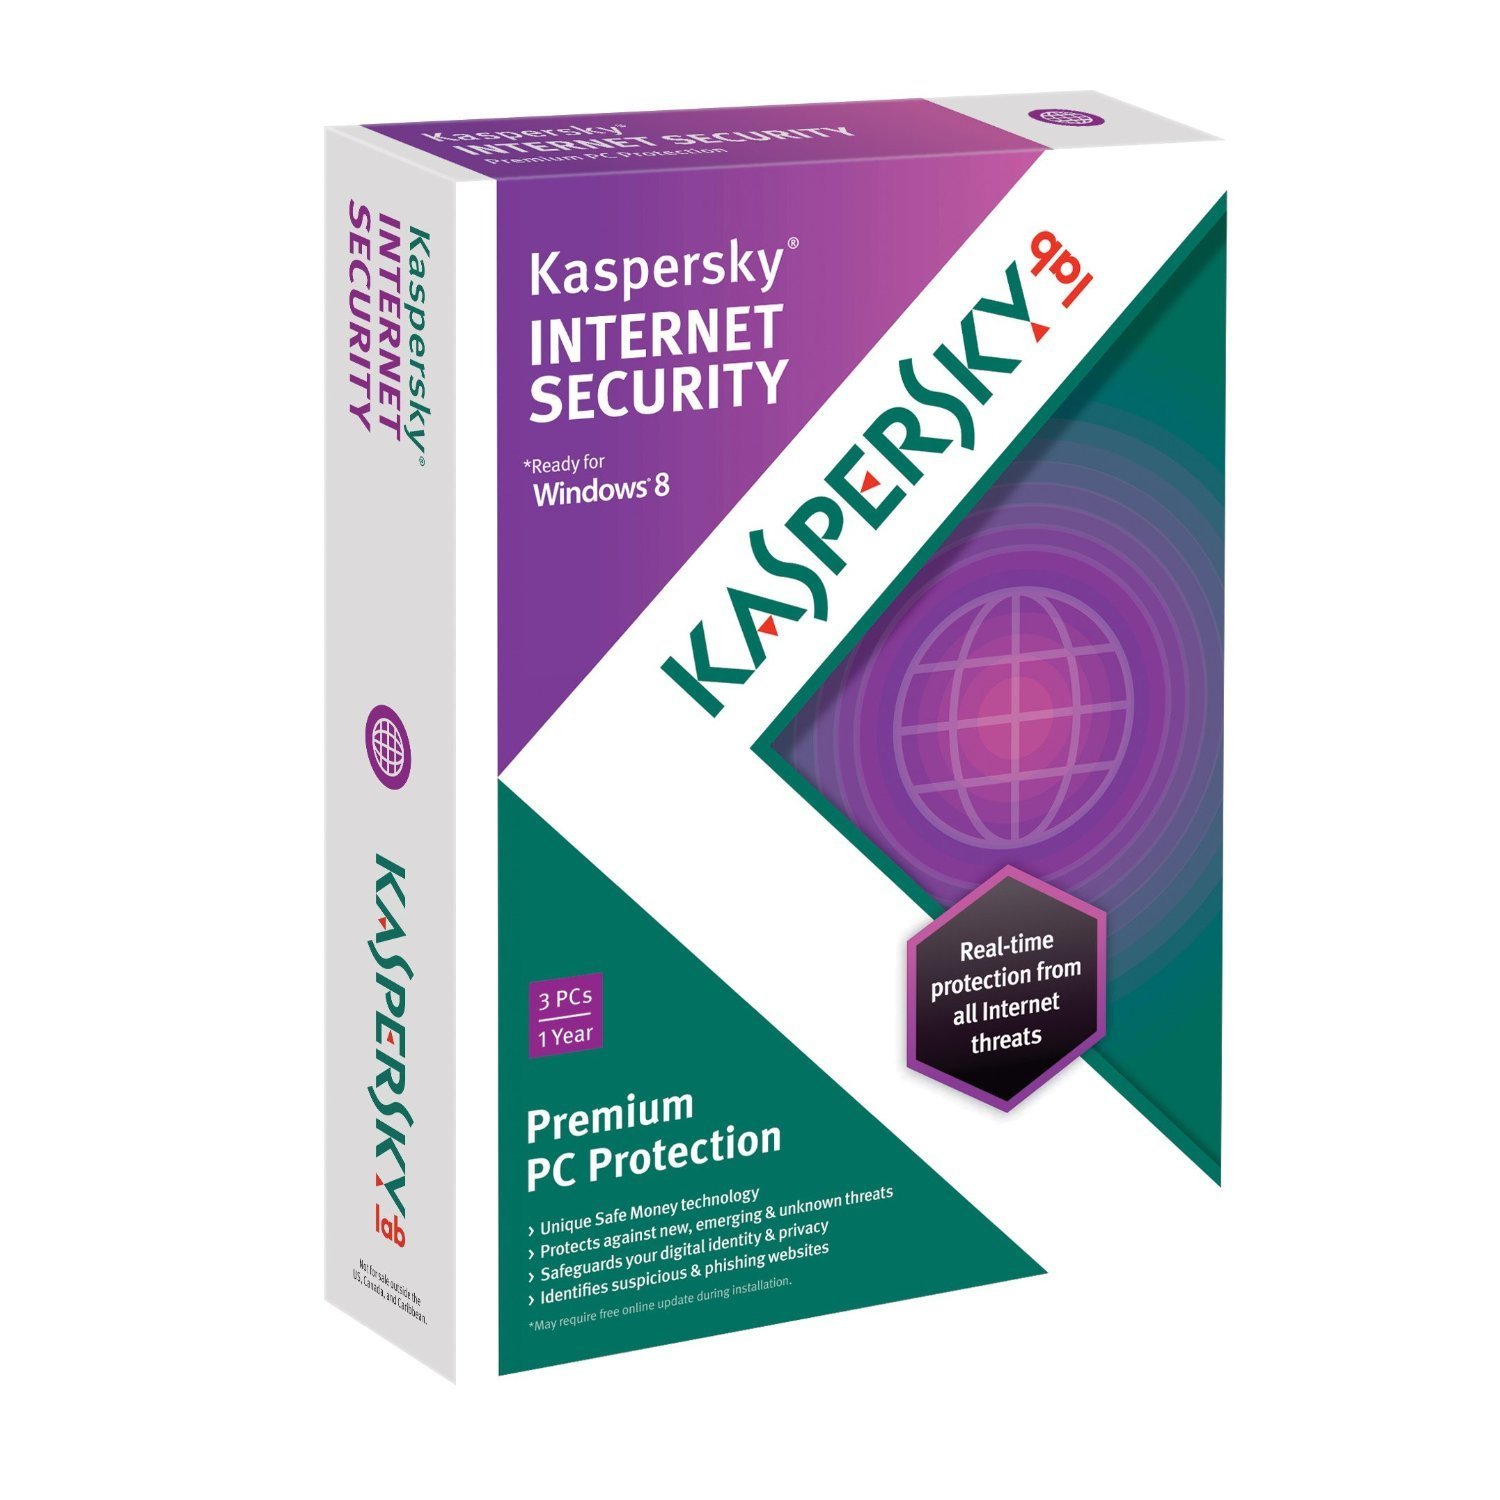 Kaspersky Internet Security 2013 - 3 Users - $14.70